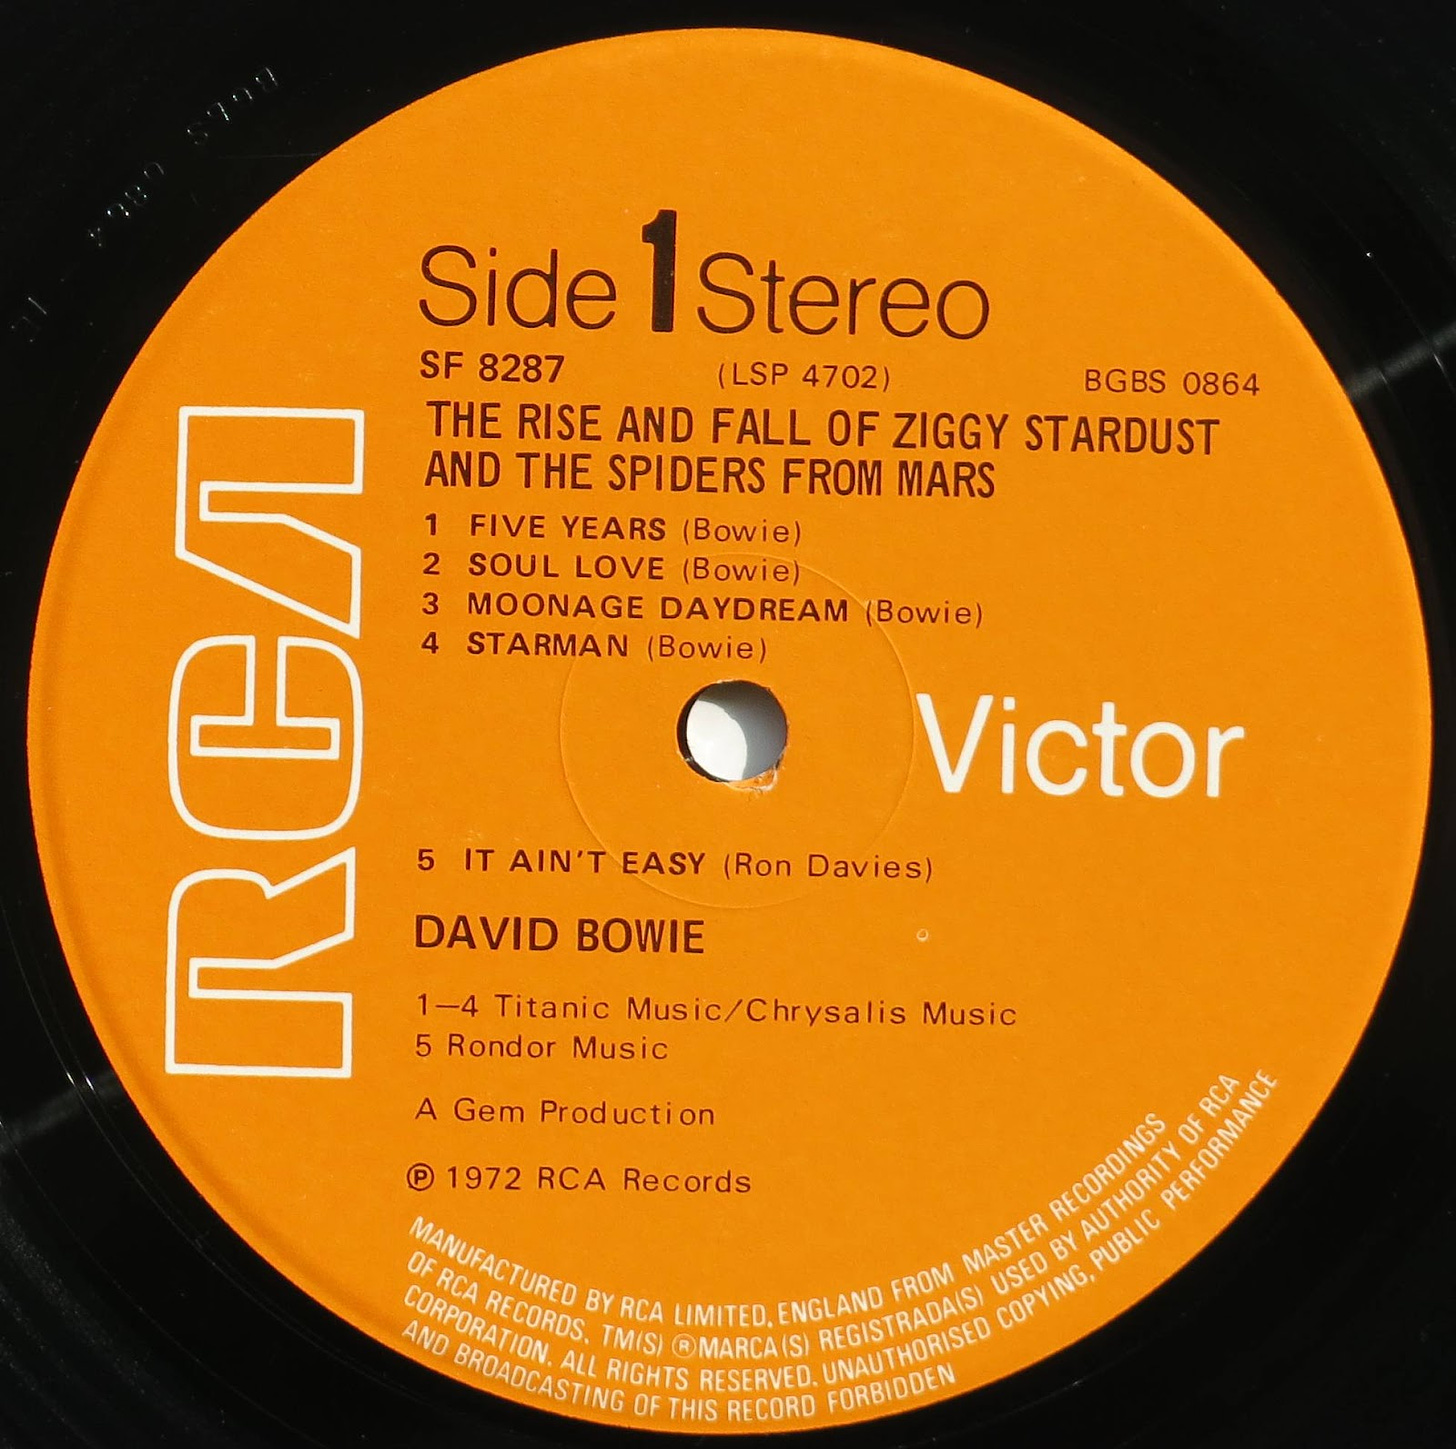 RCA orange label - first press of Ziggy Stardust